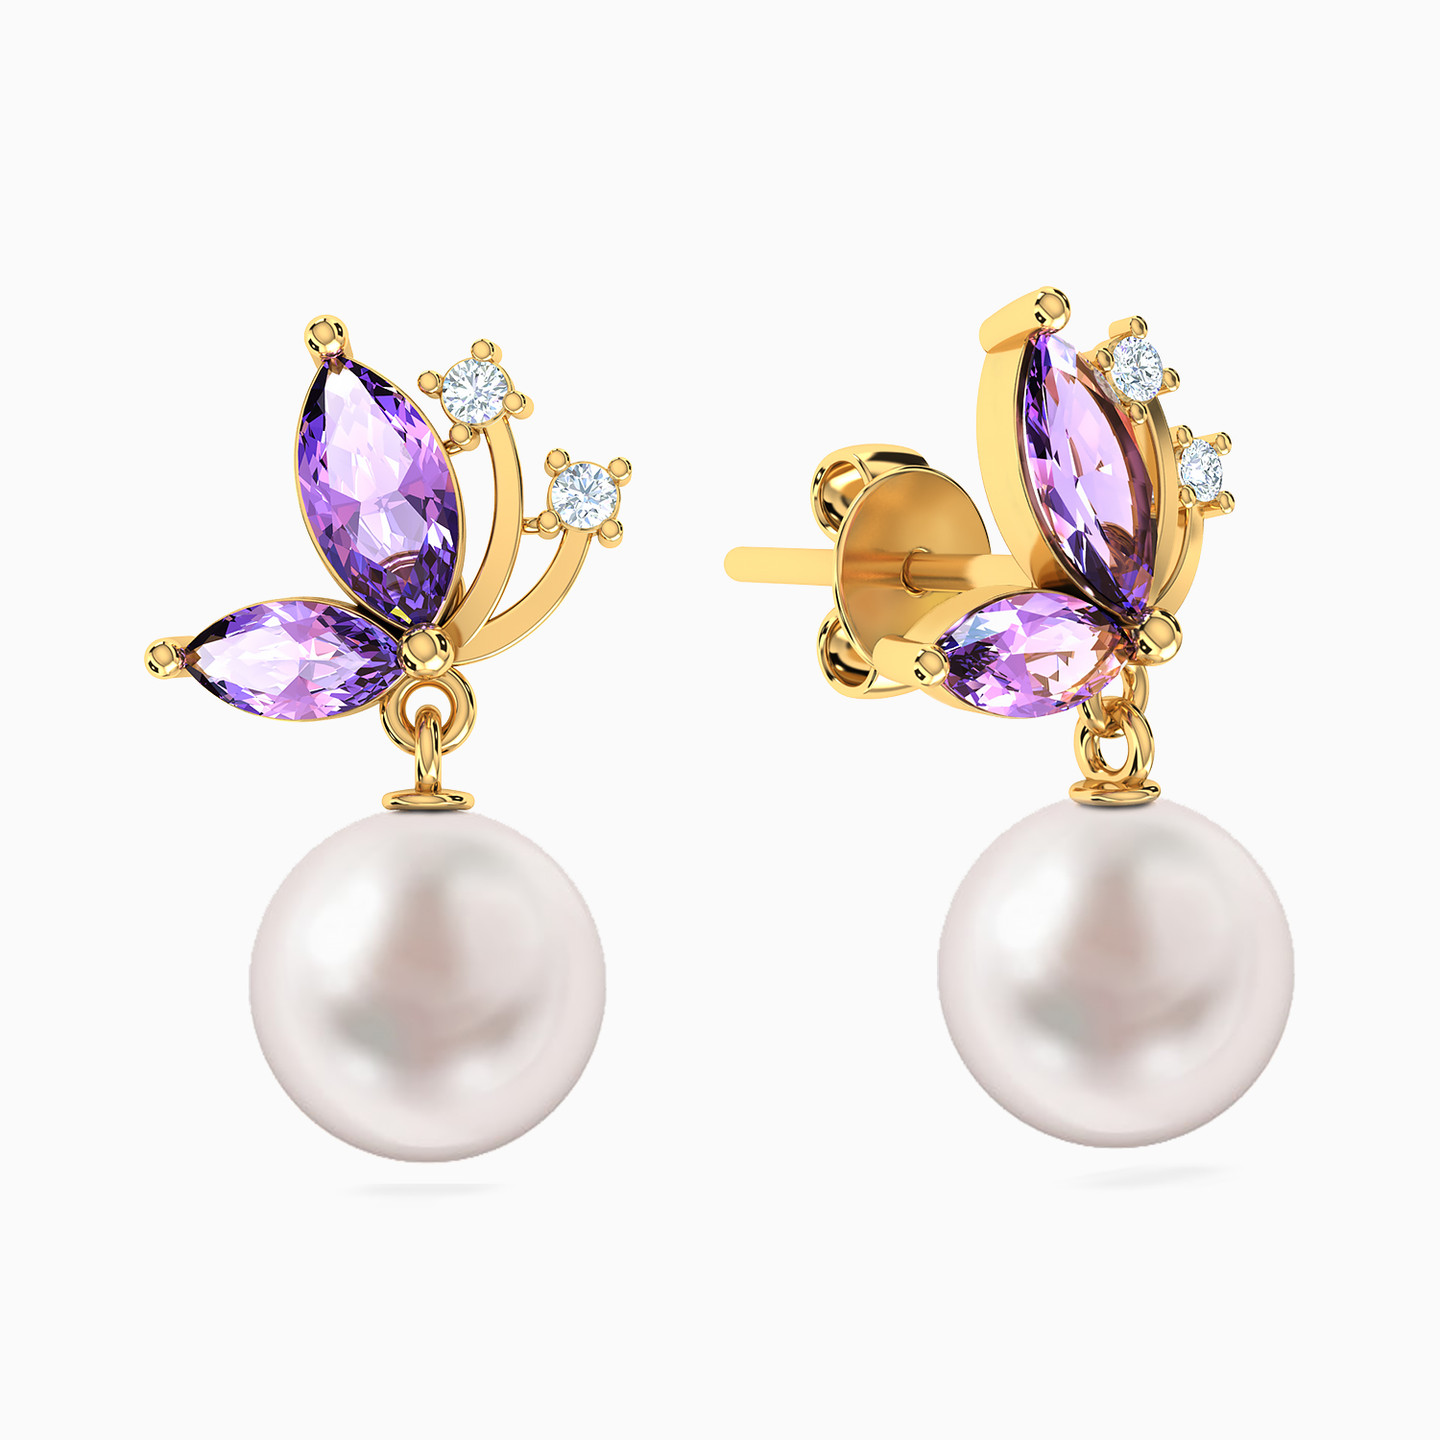 18K Gold Pearls & Colored Stones Drop Earrings - 2